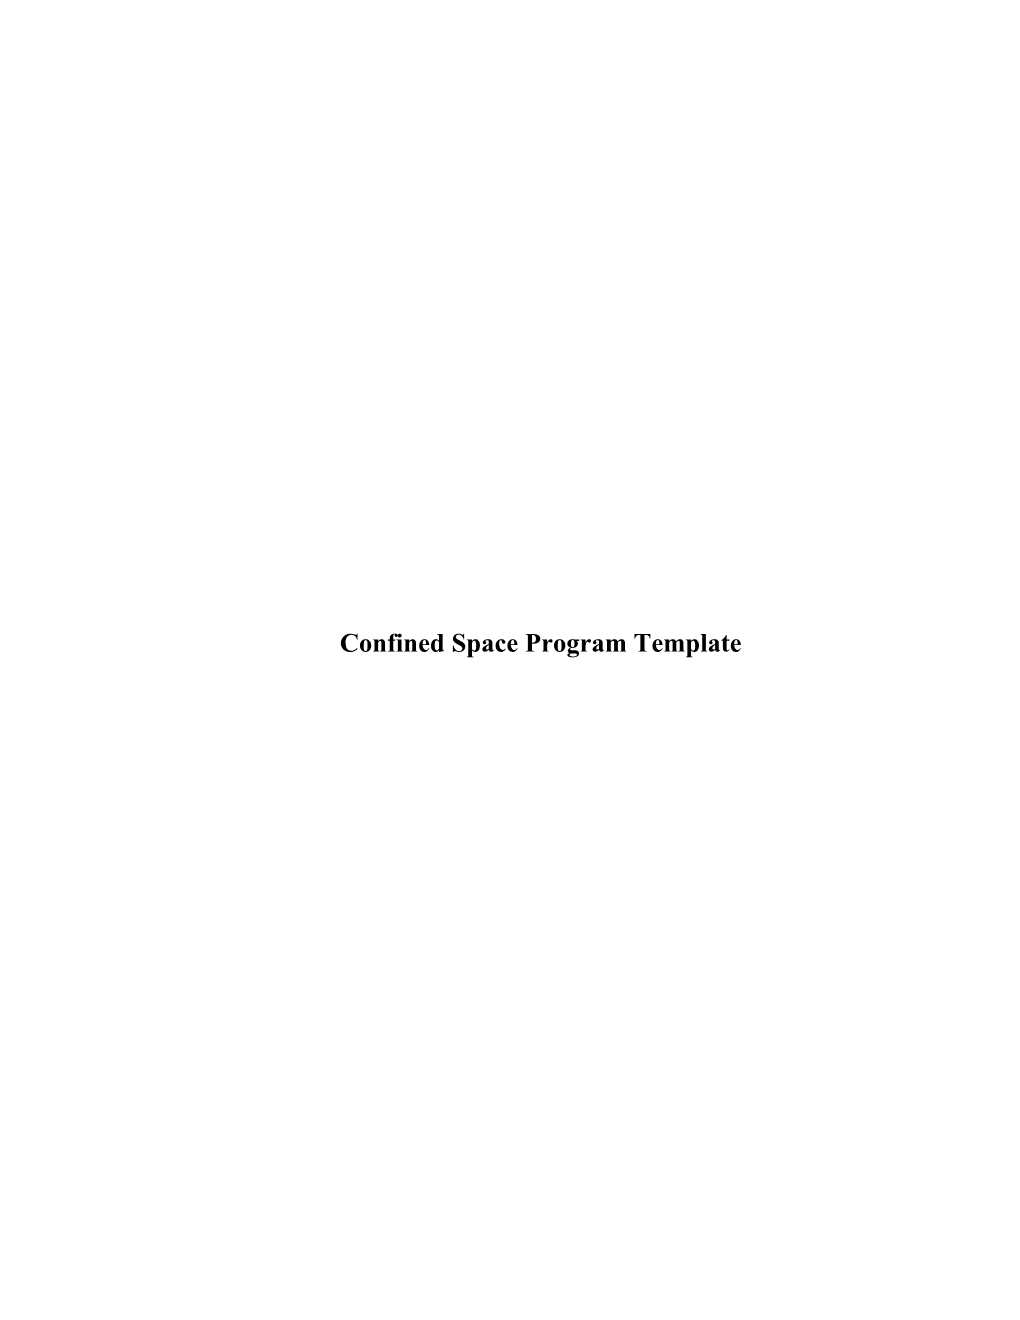 Sample Confined Space Program